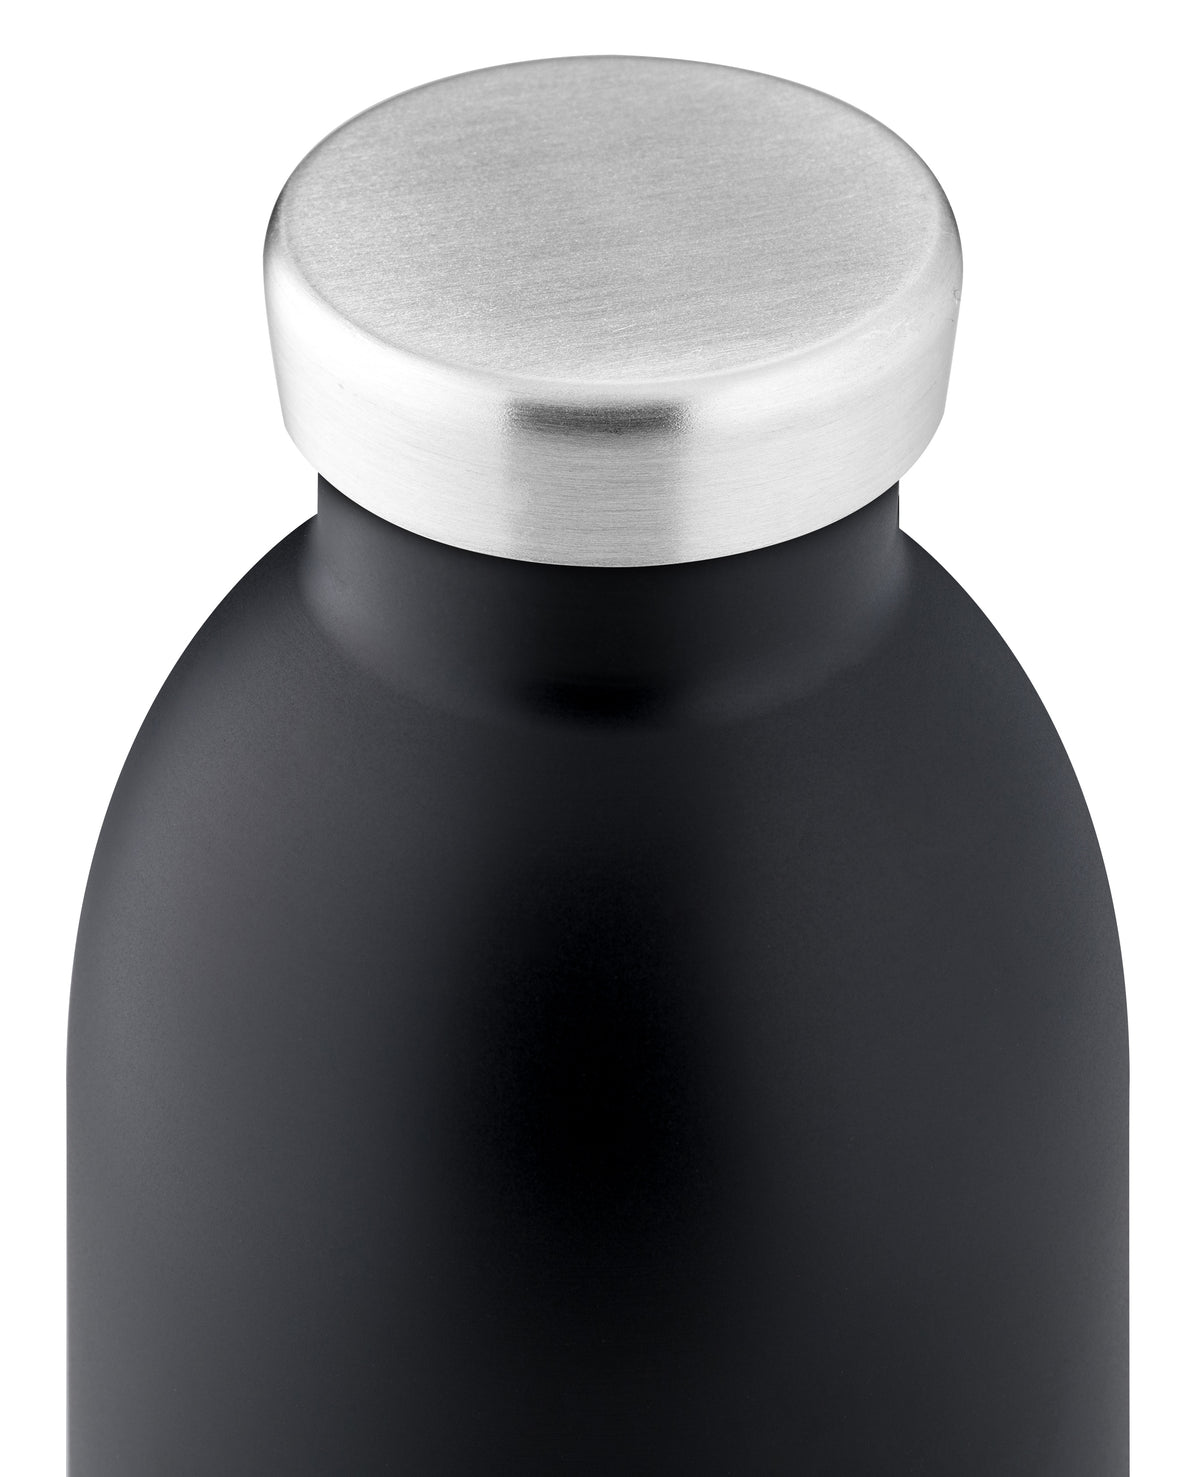 24BOTTLES Clima Double Walled Stainless Steel Water Bottle - 500ml - Stone Tuxedo Black